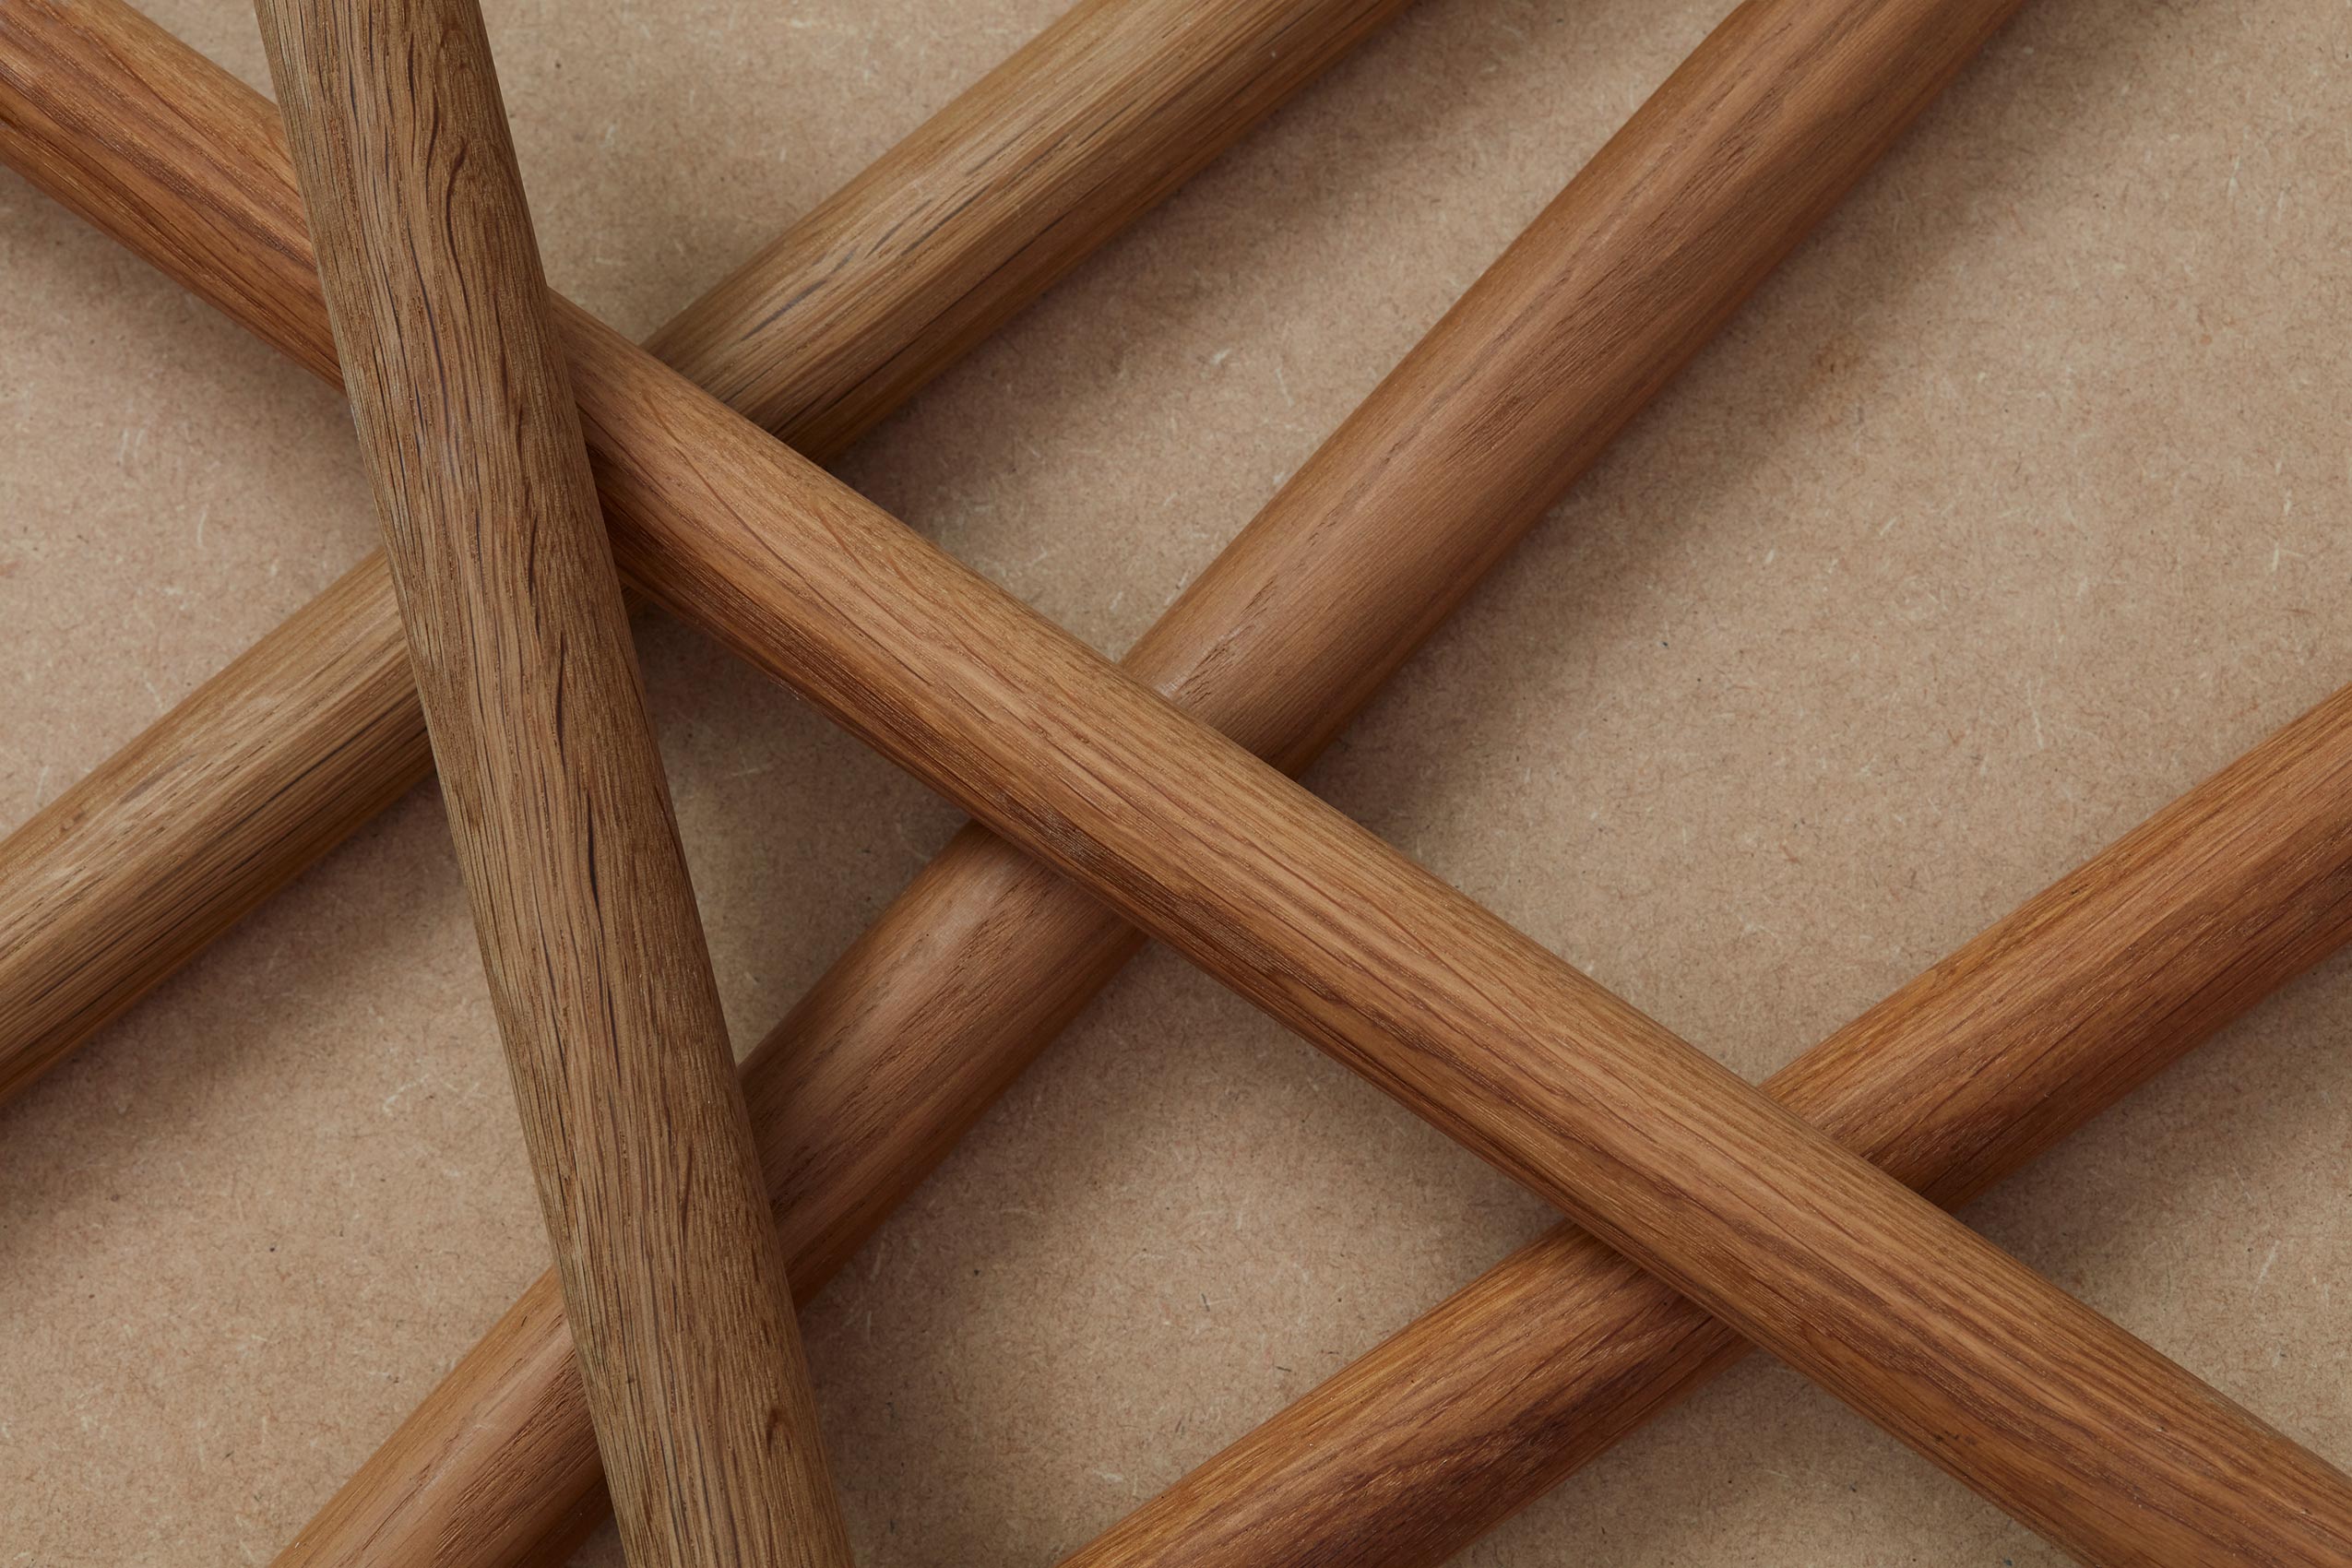 Flokk_Concept_material_wood_chair_legs